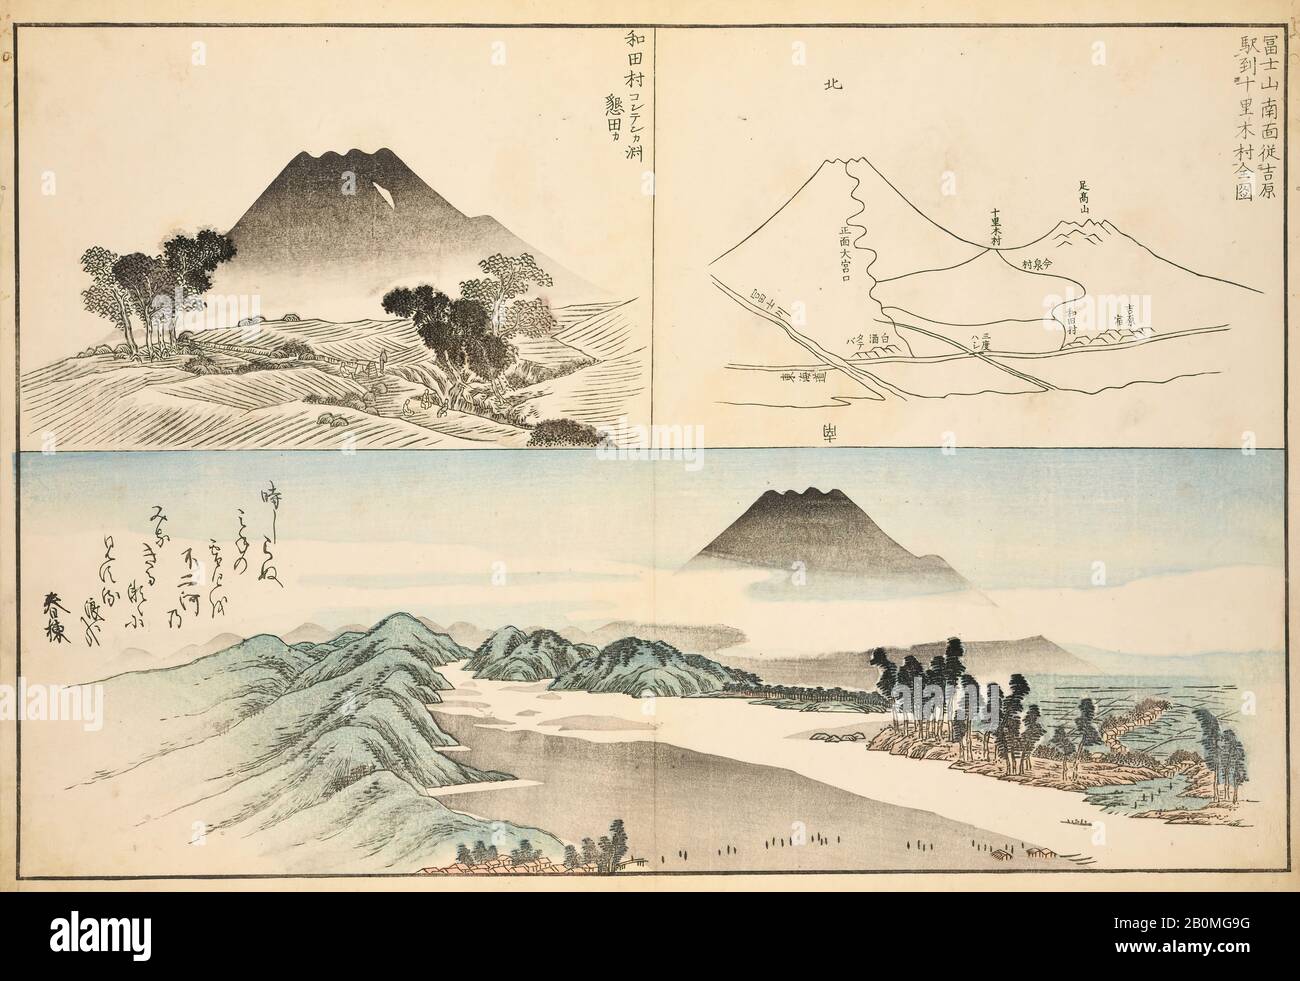 Koizumi Daizan, Realistic Pictures of Mount Fuji (Fugaku shashin), Japan, Koizumi Daizan, 1845 (Kōka 2), Japan, Woodblock-printed book; ink and color on paper, 12 3/4 x 9 1/8 in. (32.4 x 23.2 cm), Illustrated Books Stock Photo